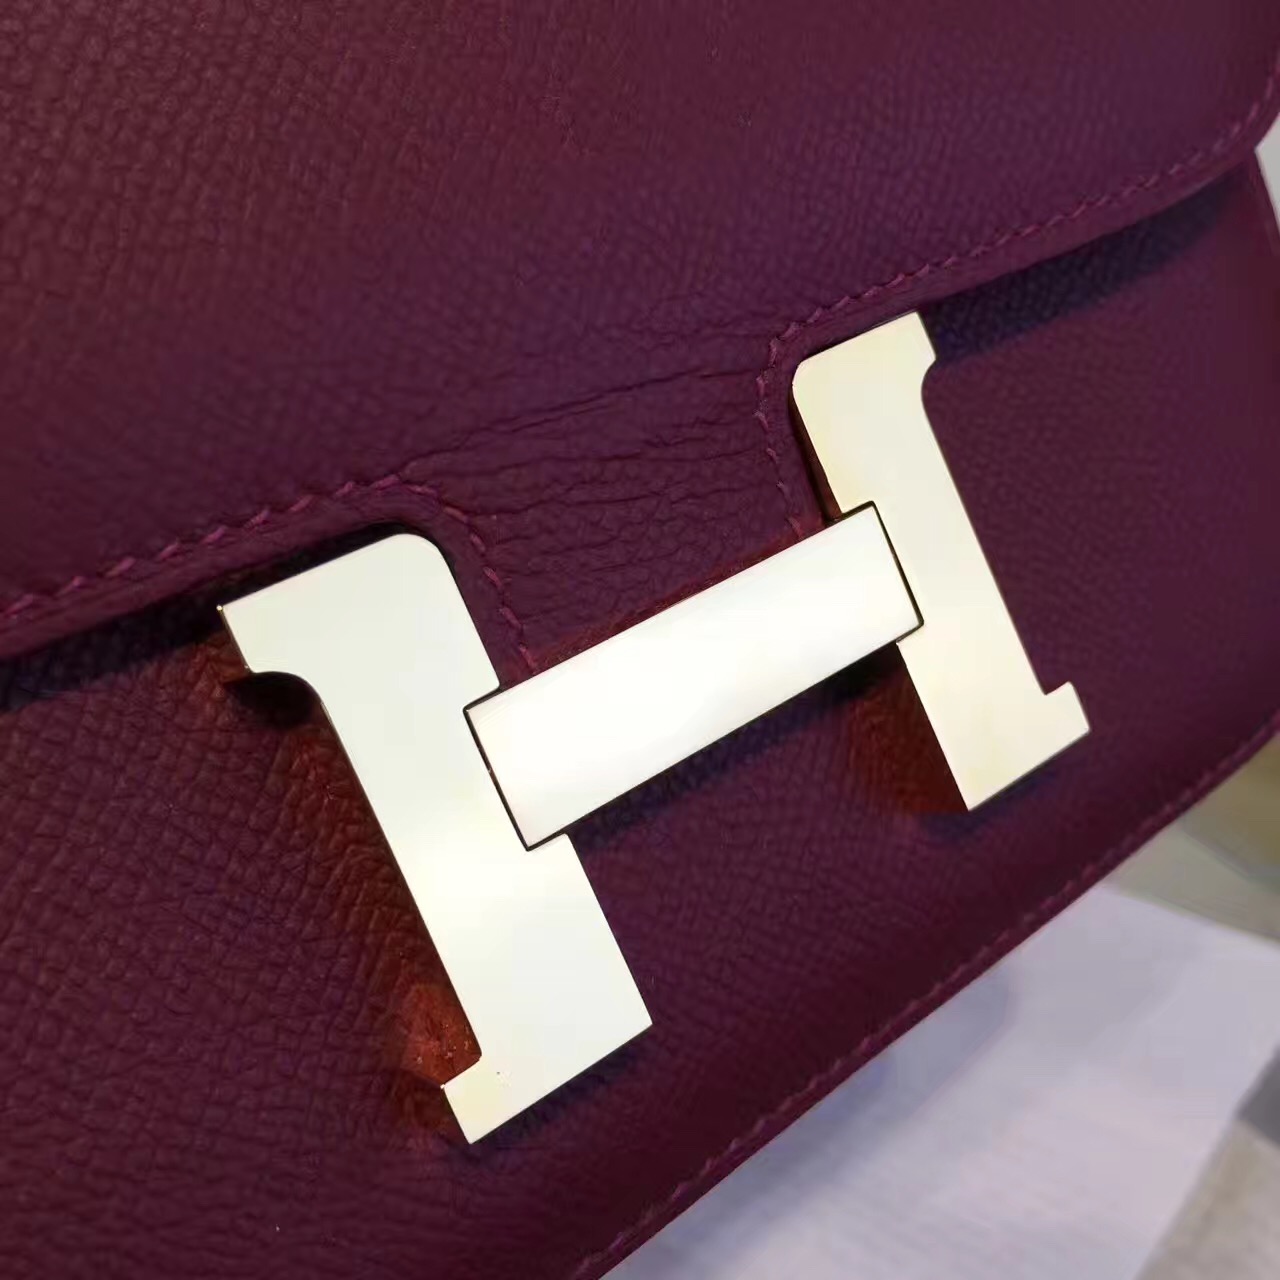 Hermes original epsom leather constance bag C23 burgundy